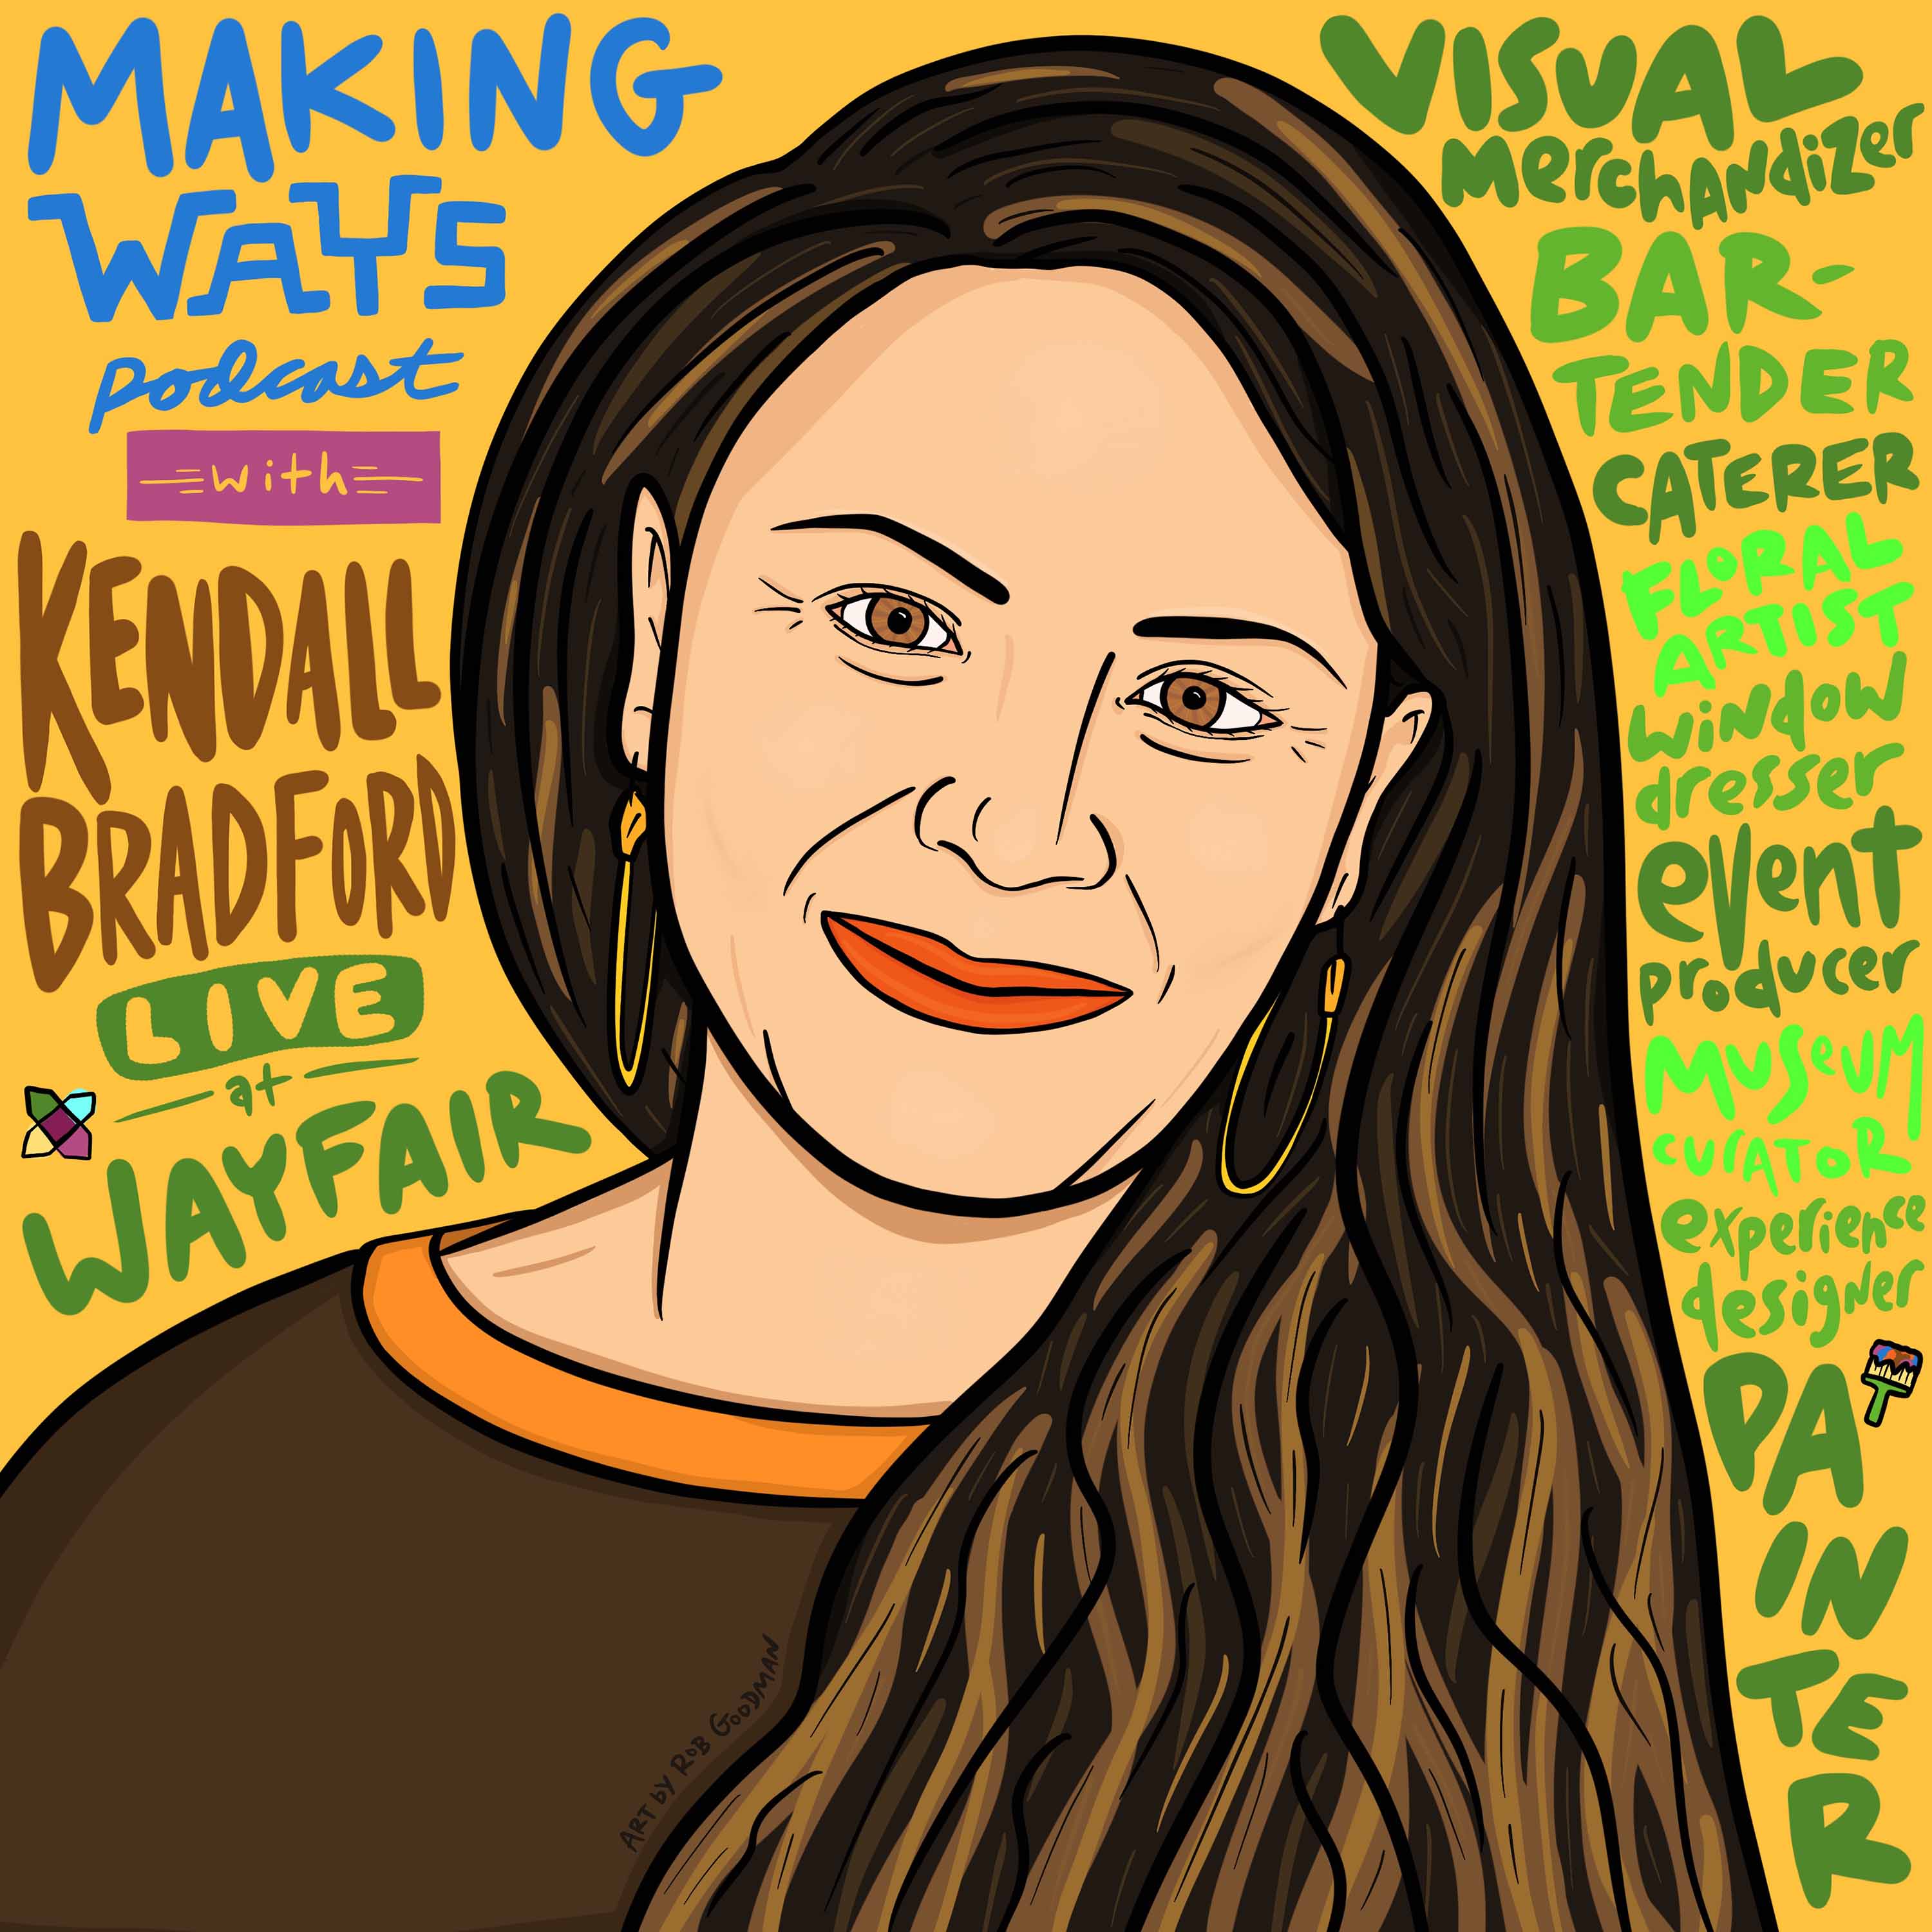 Experience designer and artist Kendall Bradford live at Wayfair